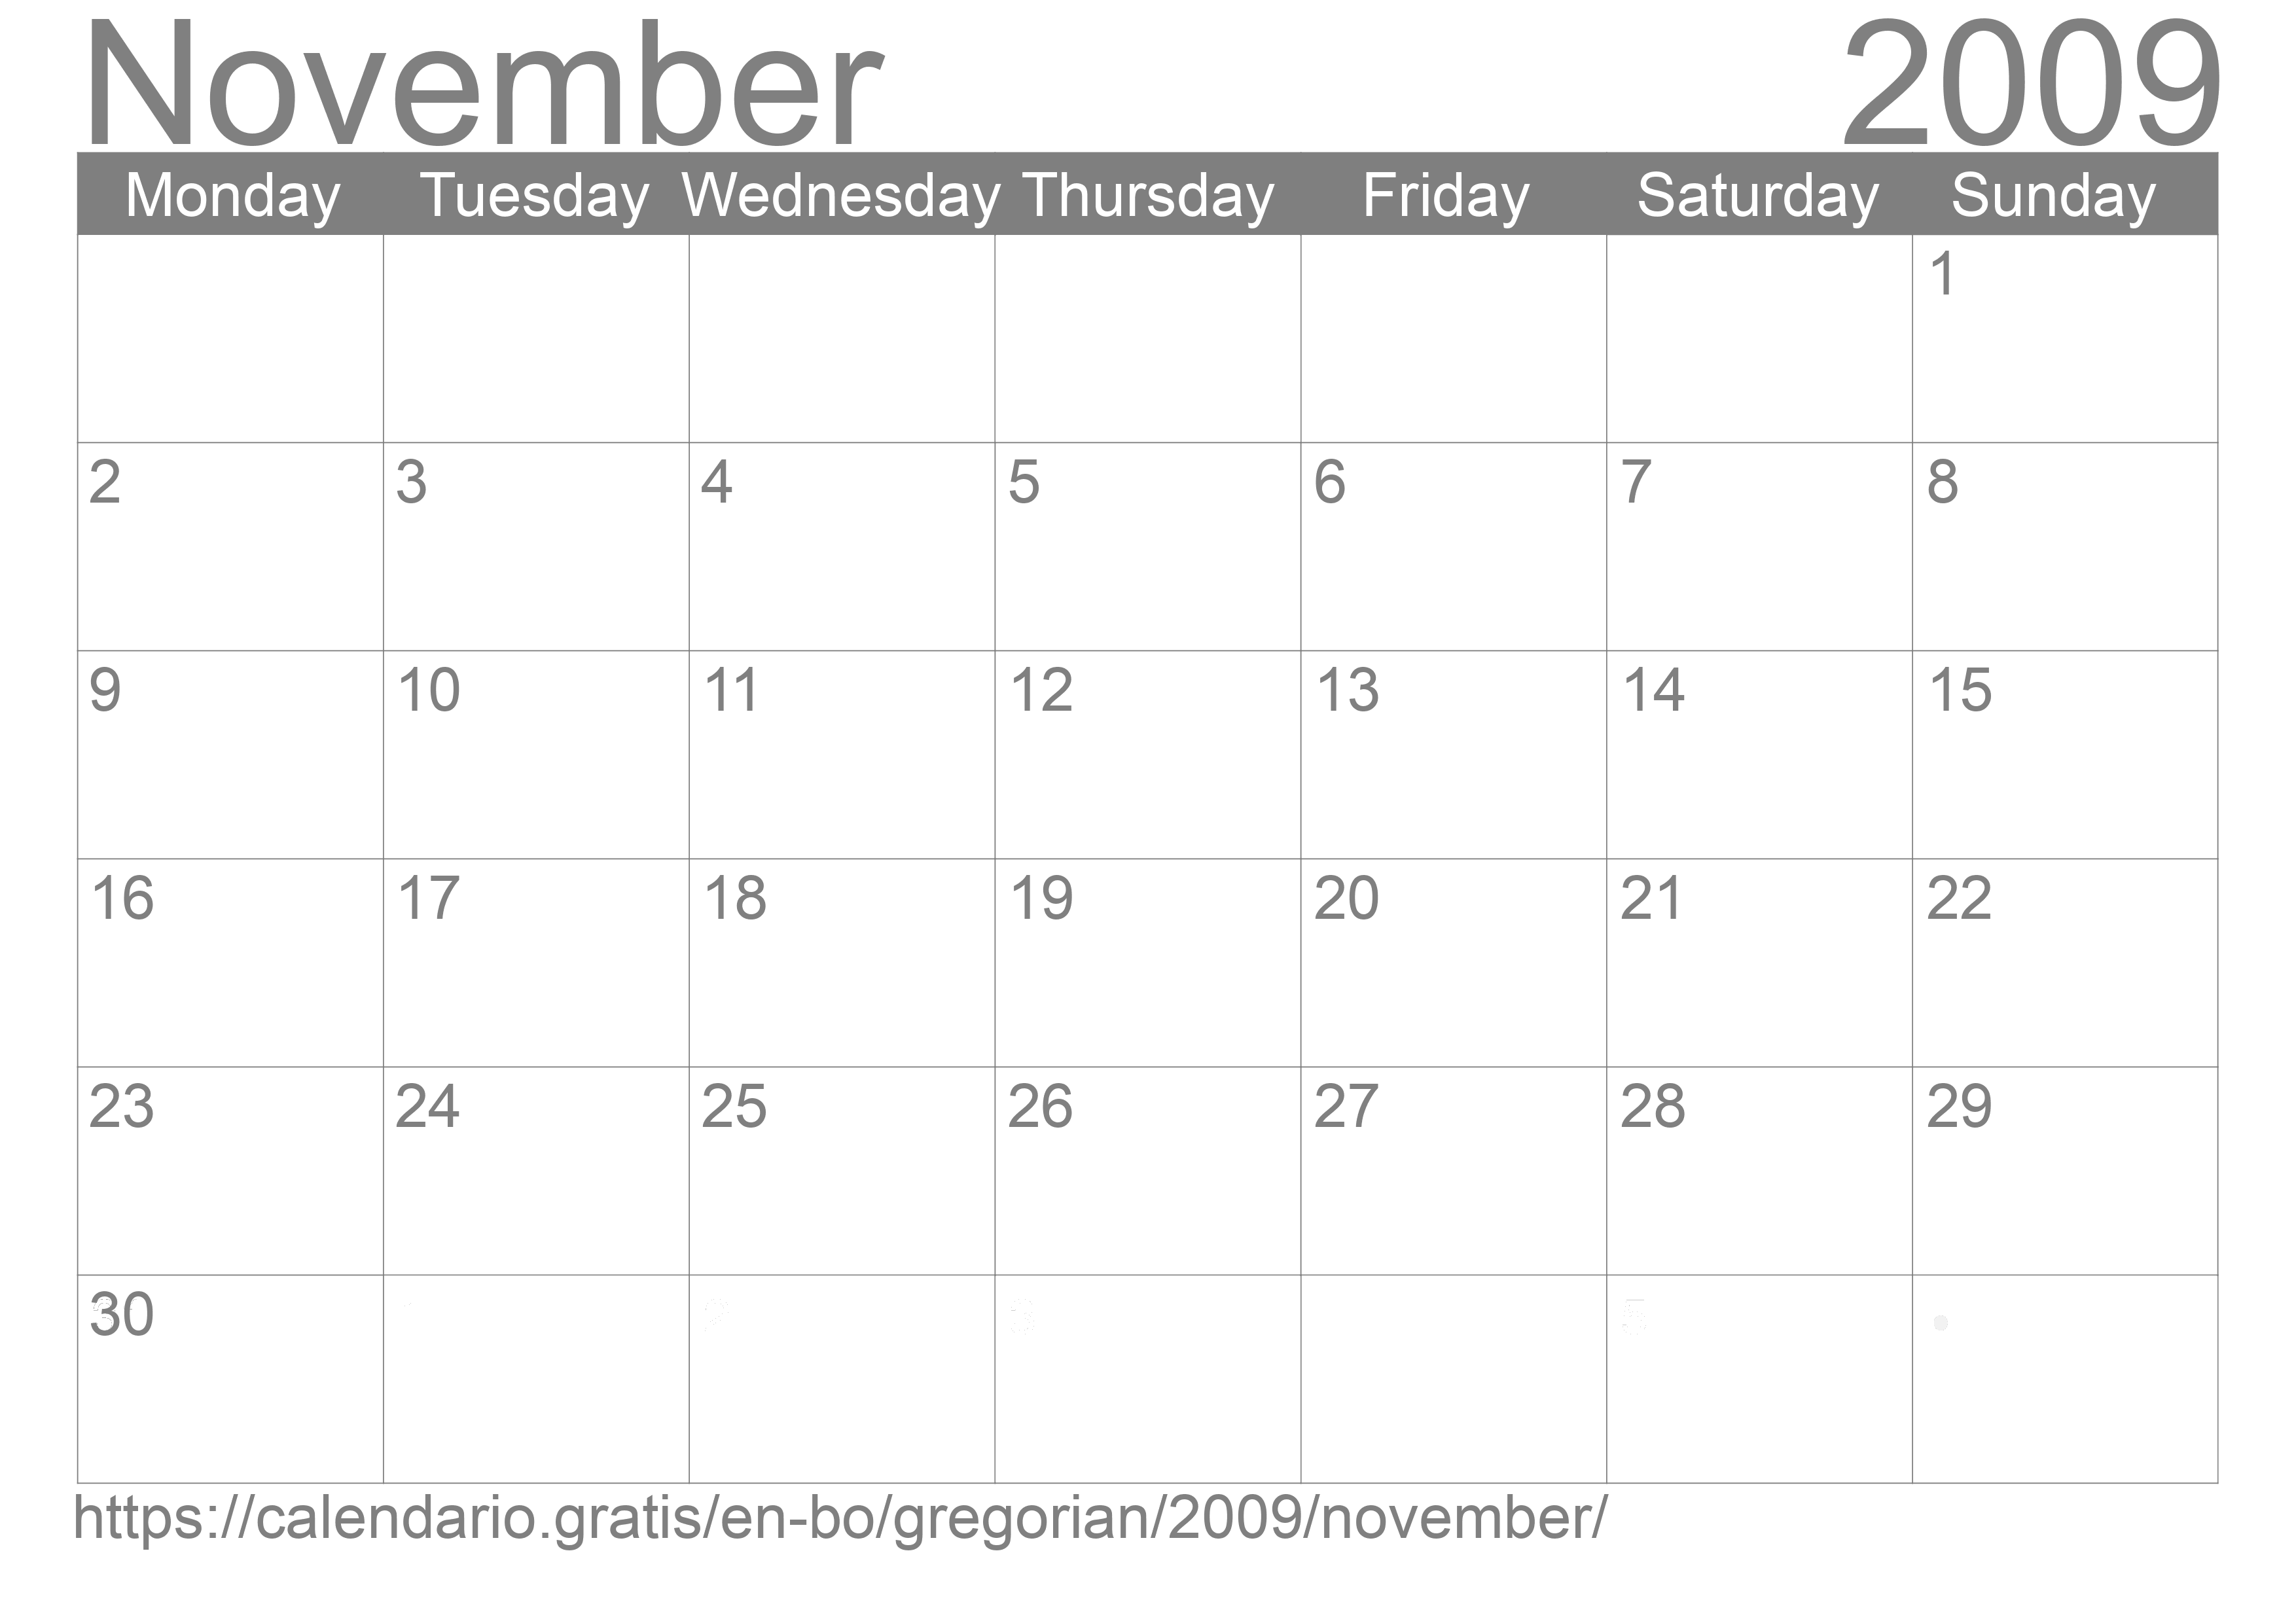 Calendar November 2009 to print